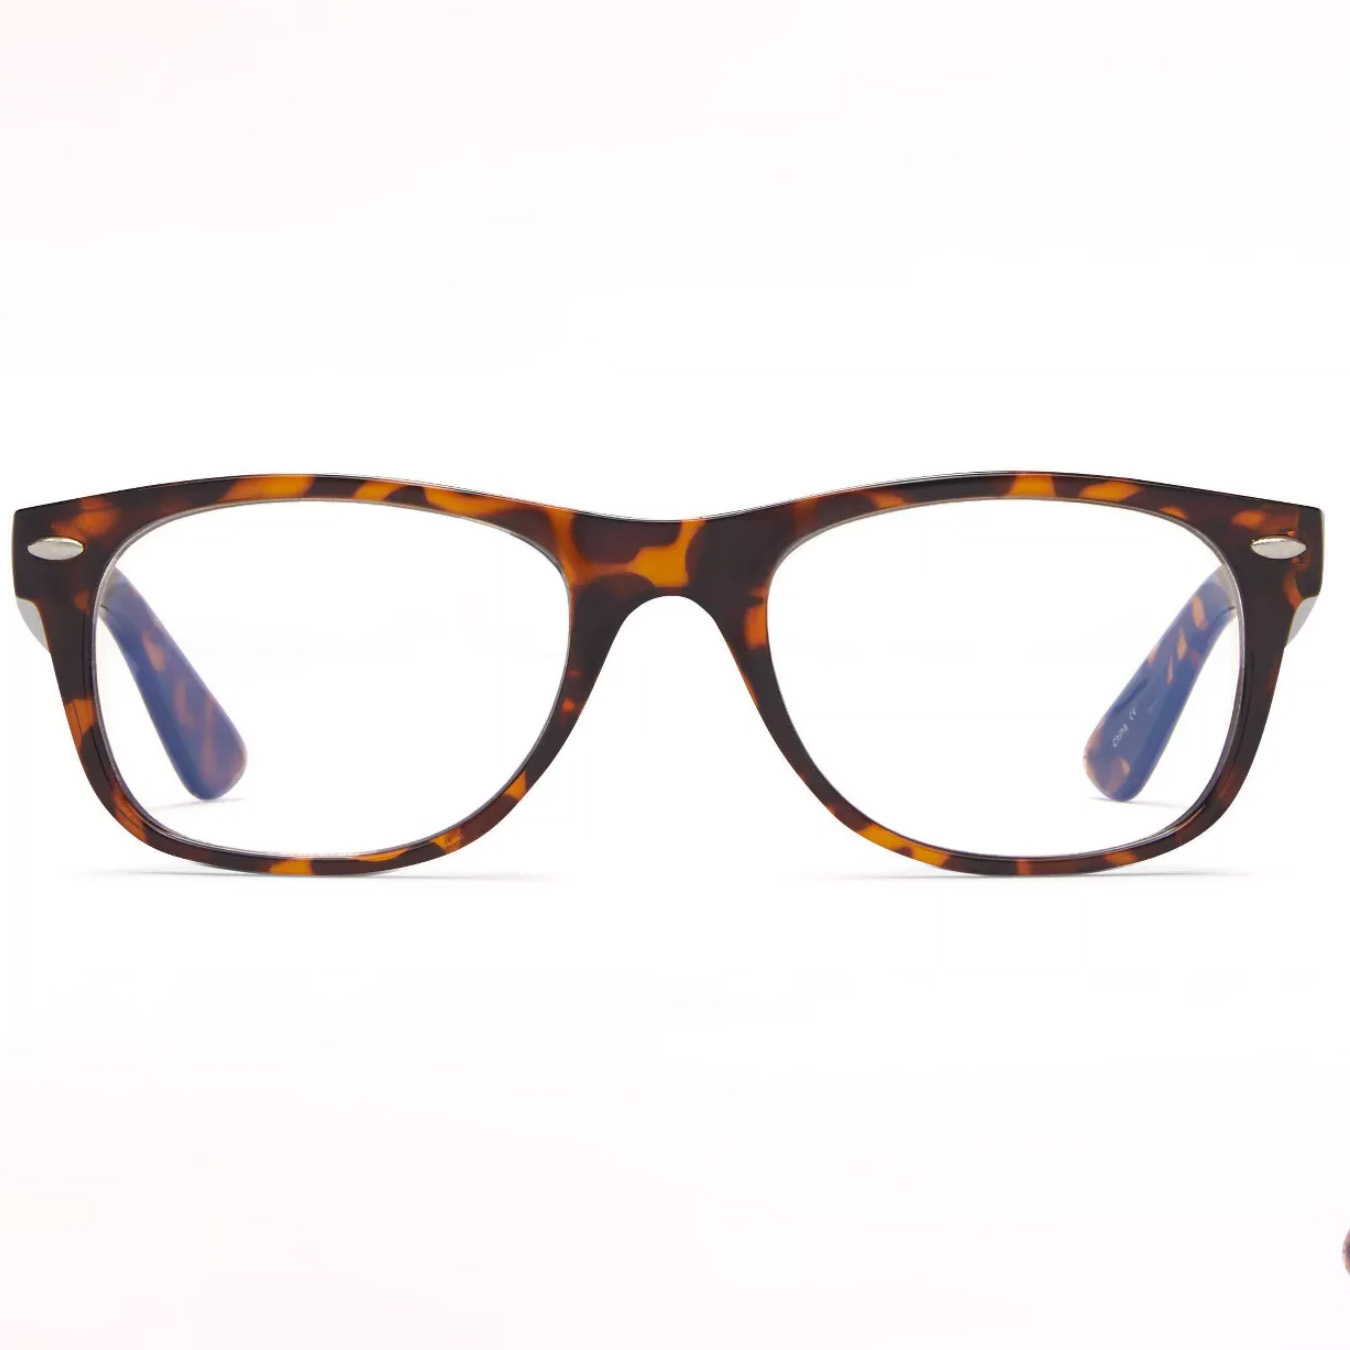 Dark brown patterned Rectangular Glasses